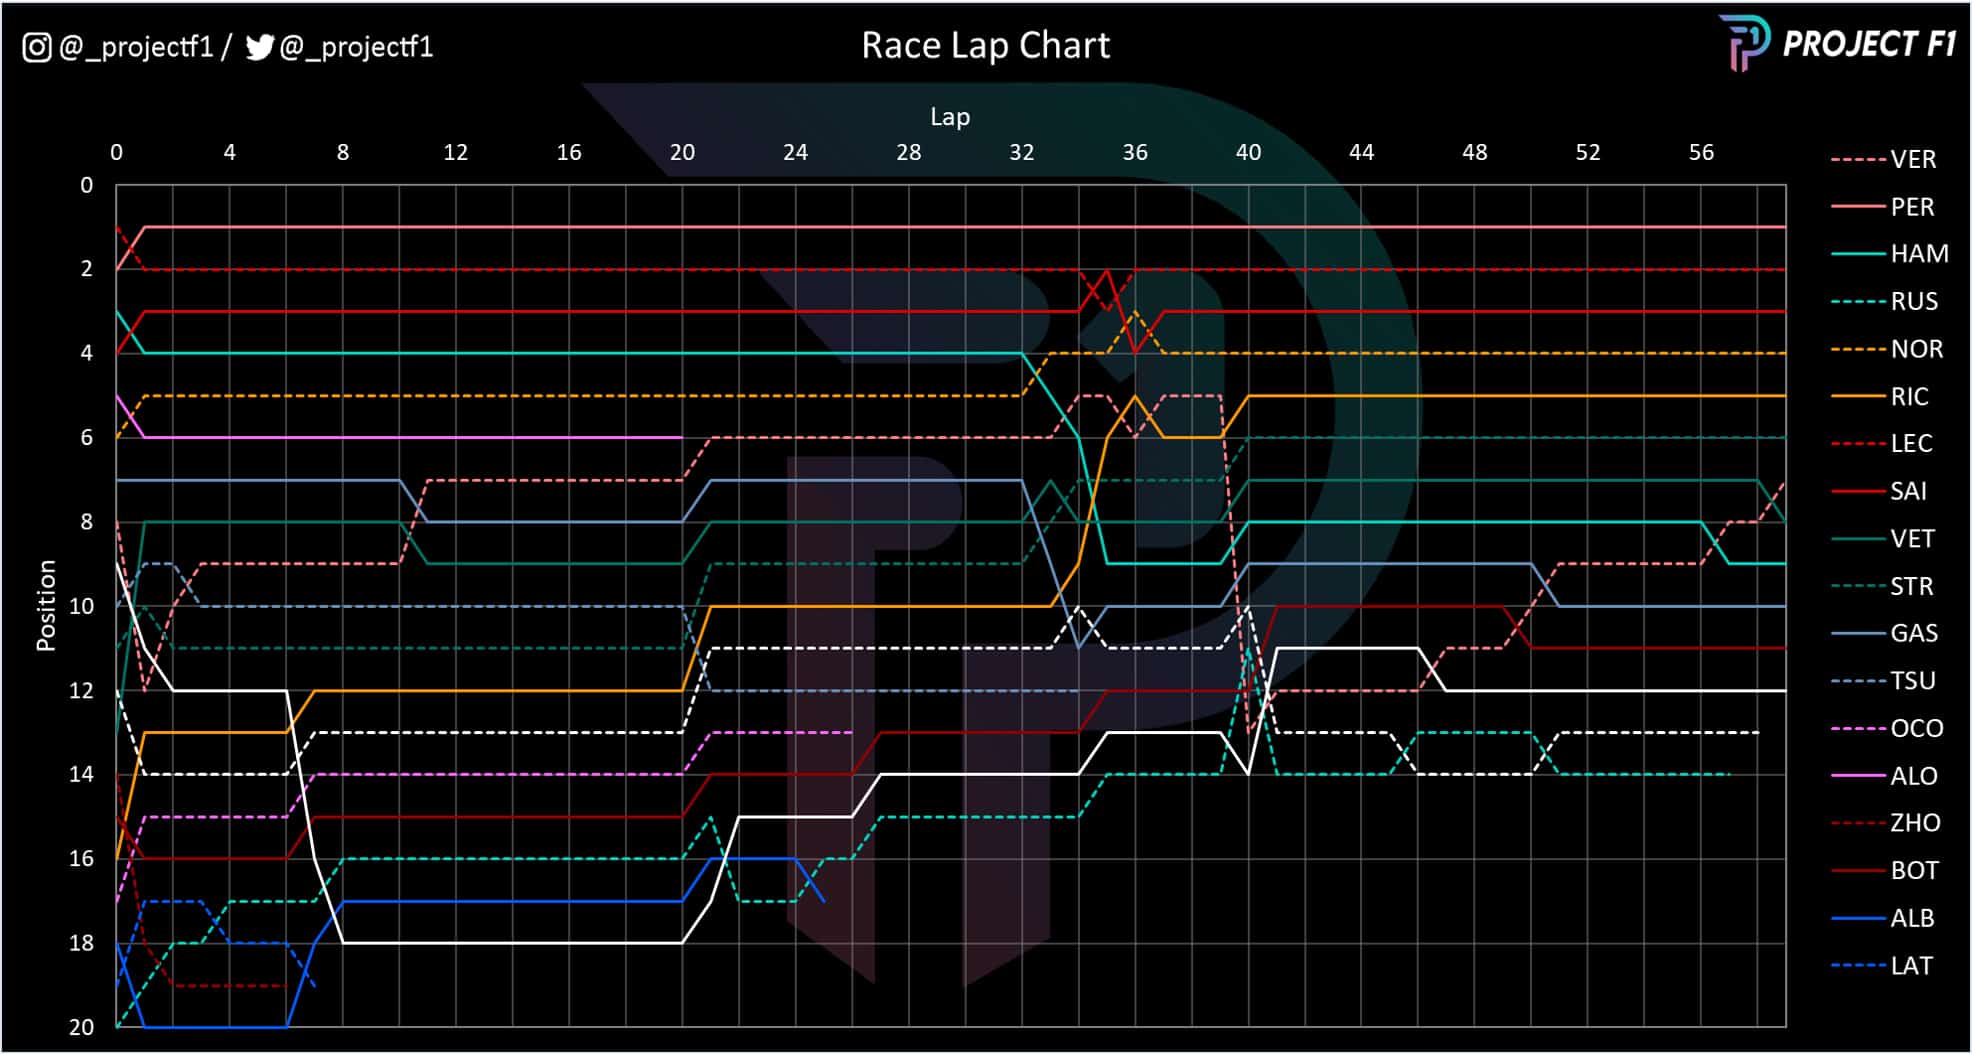 2022 Singapore GP race lap chart